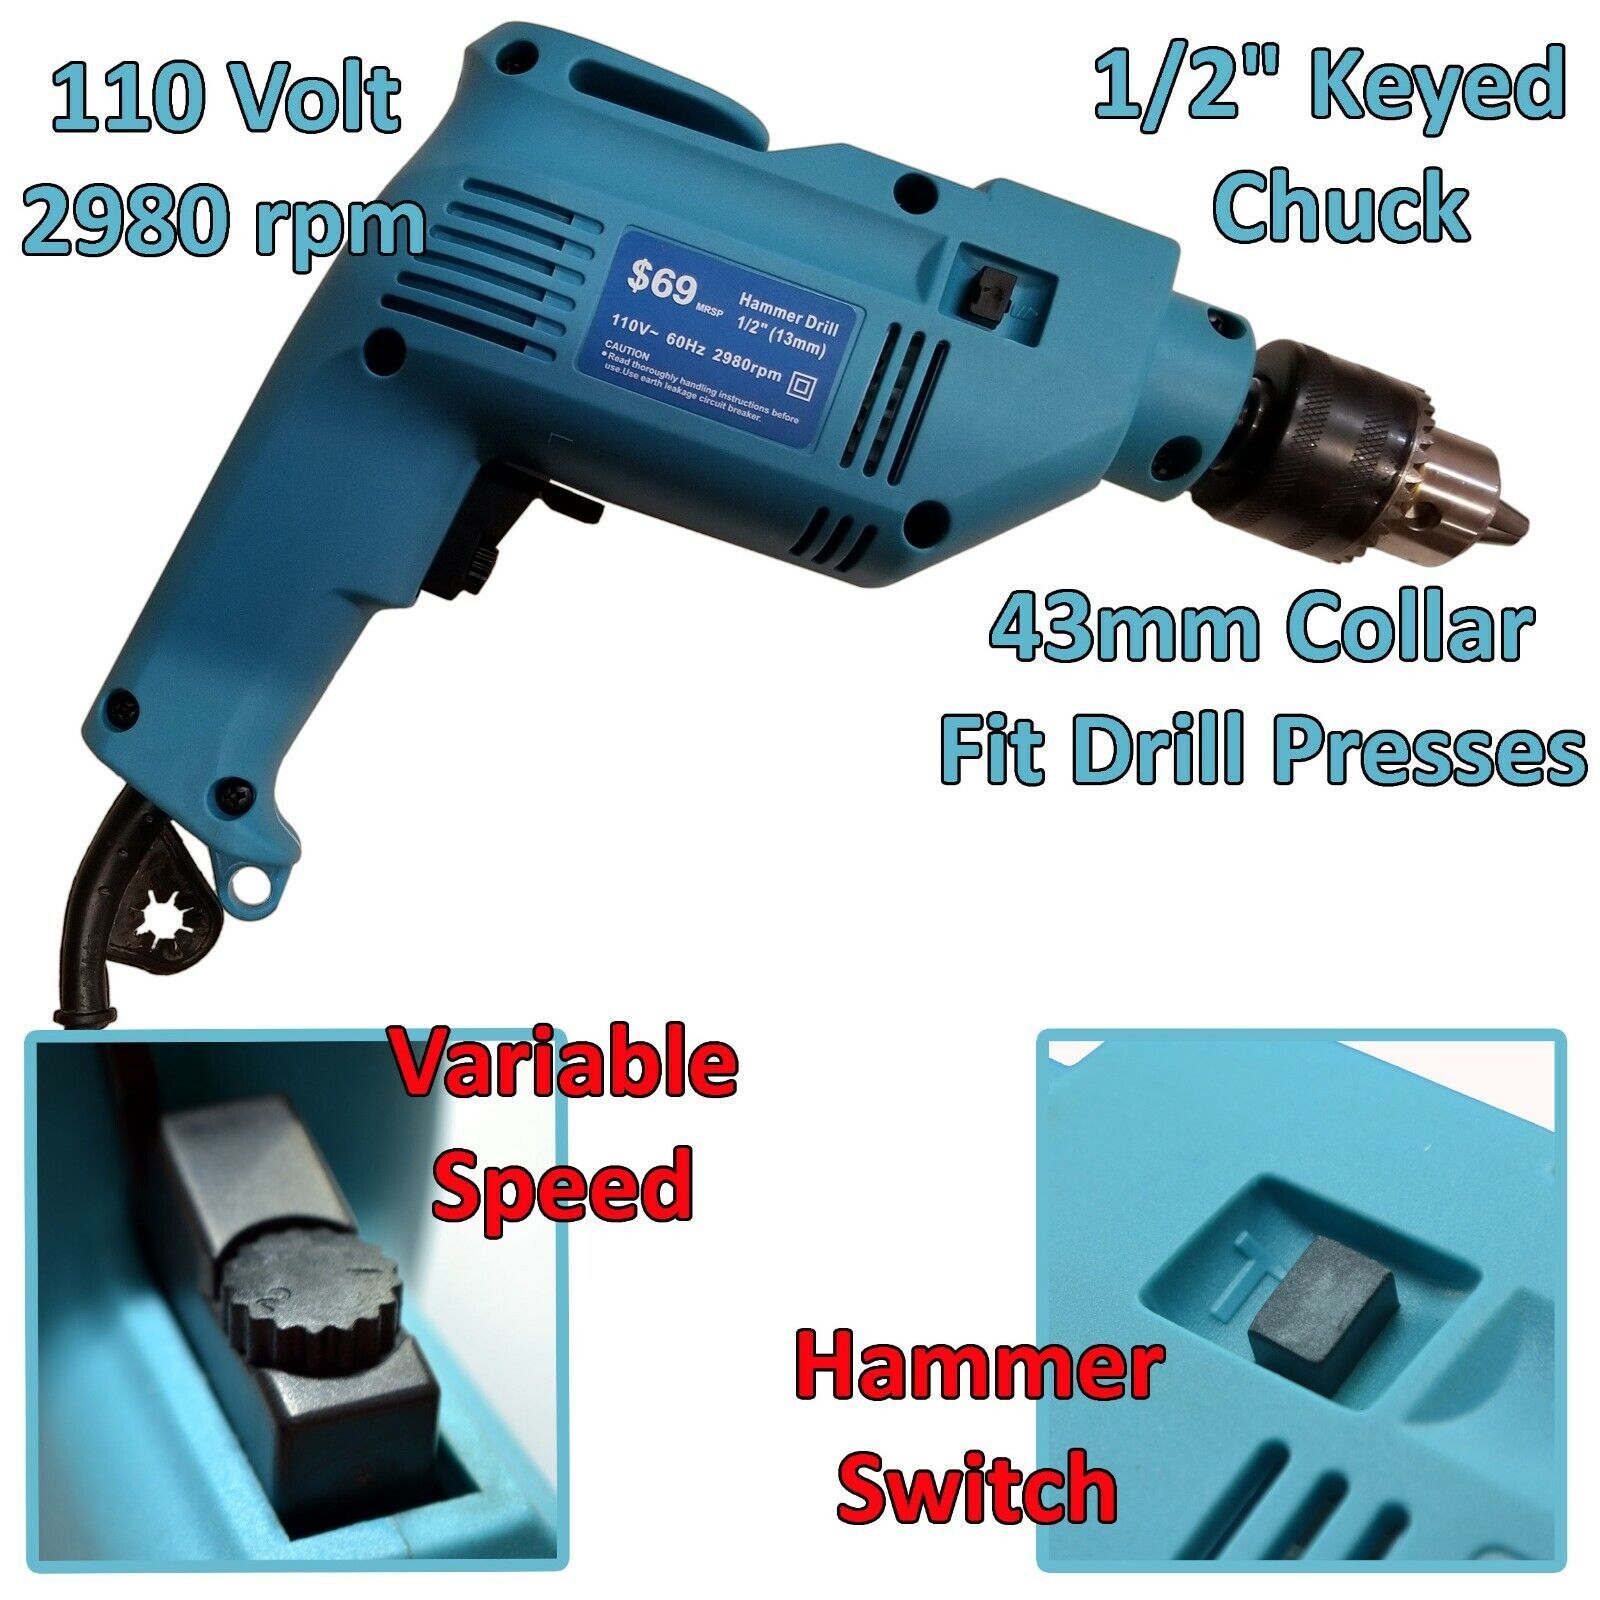 Hammer Drill 1/2" Chuck 43mm Collar 110v will fit Drill Stand +Key Brick Masonry - $19.79